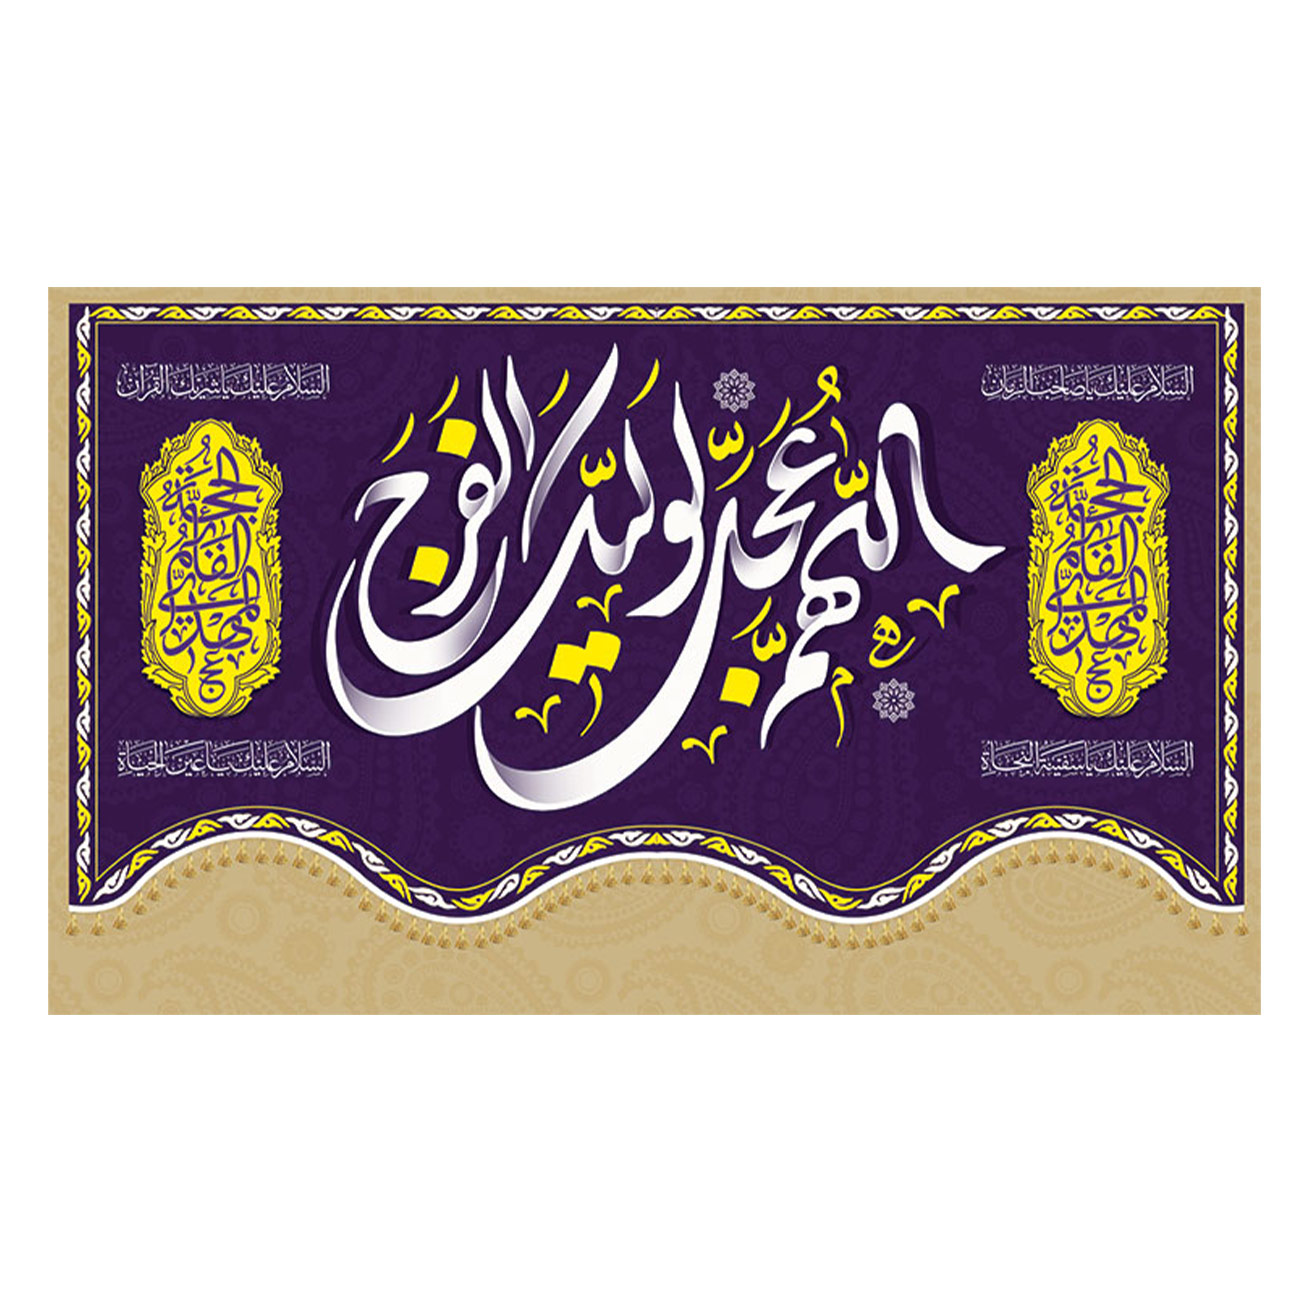 پرچم طرح نیمه شعبان مدل اللهم عجل لولیک الفرج کد 2345H